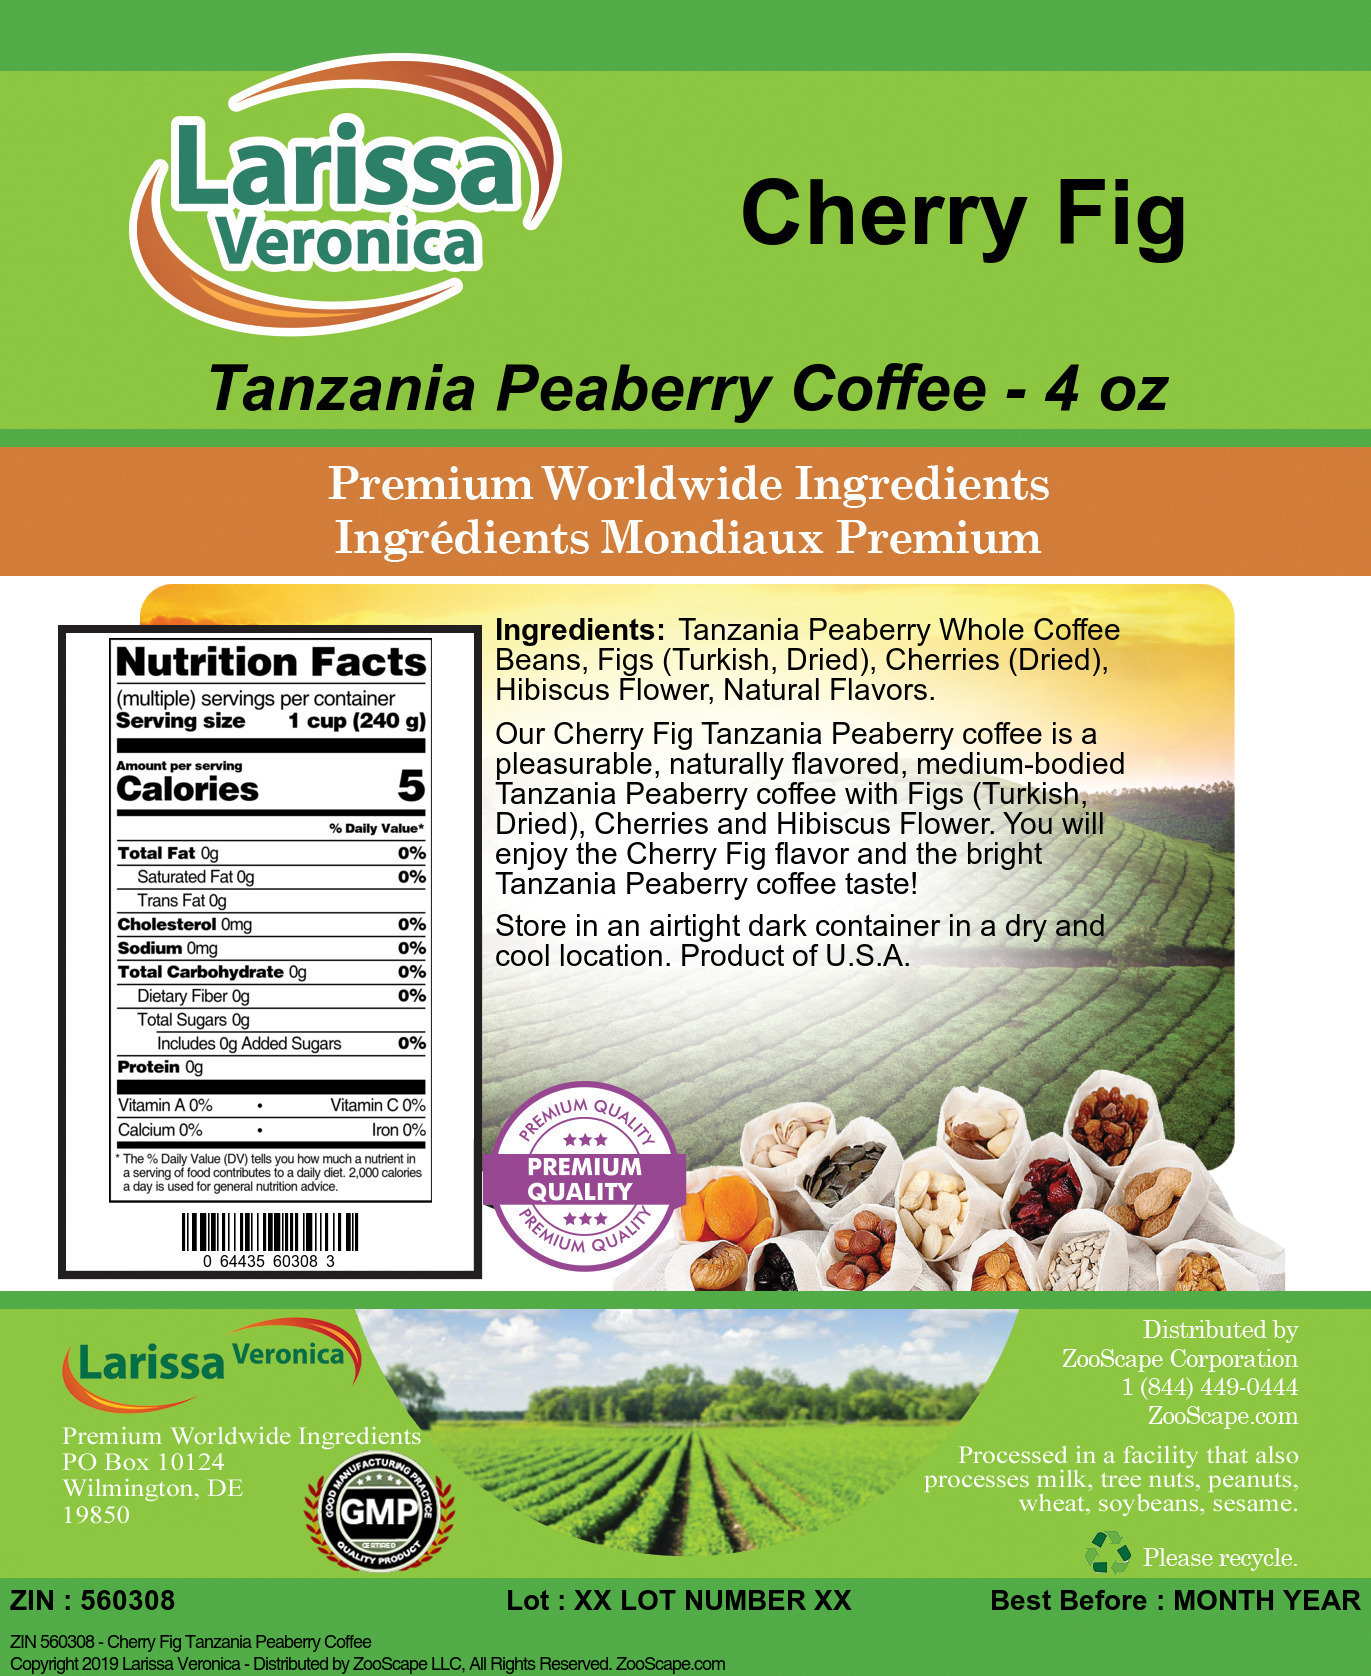 Cherry Fig Tanzania Peaberry Coffee - Label